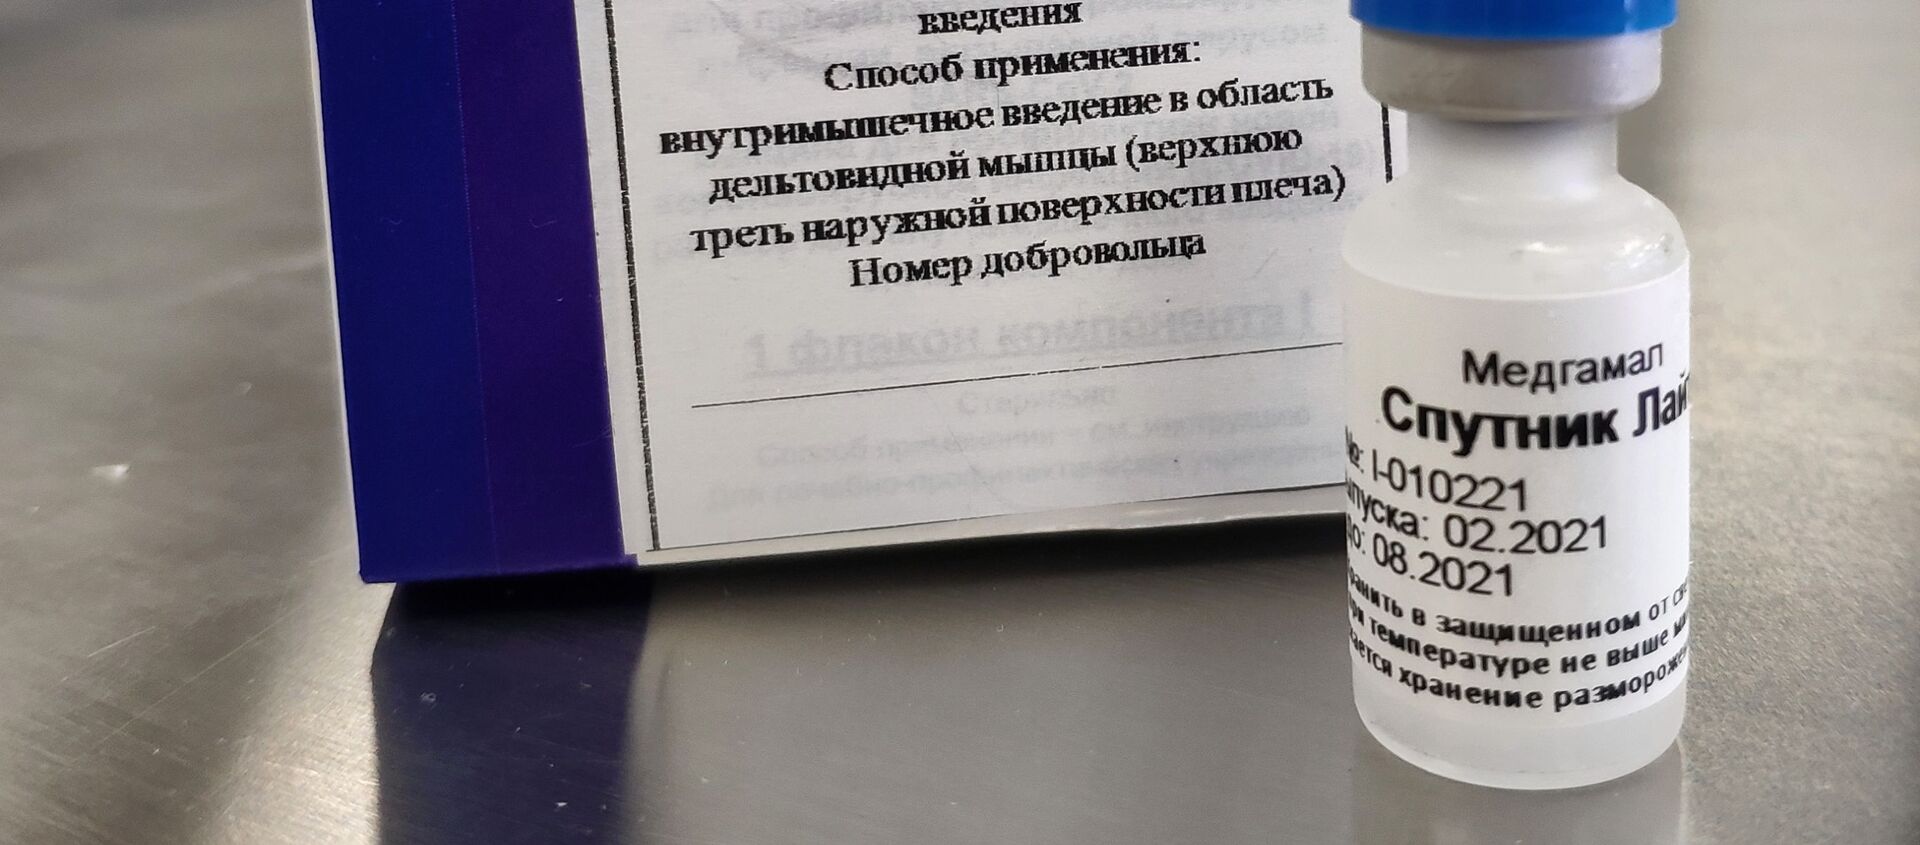 Упаковка однокомпонентной вакцины от COVID-19 Спутник Лайт - 俄罗斯卫星通讯社, 1920, 06.05.2021